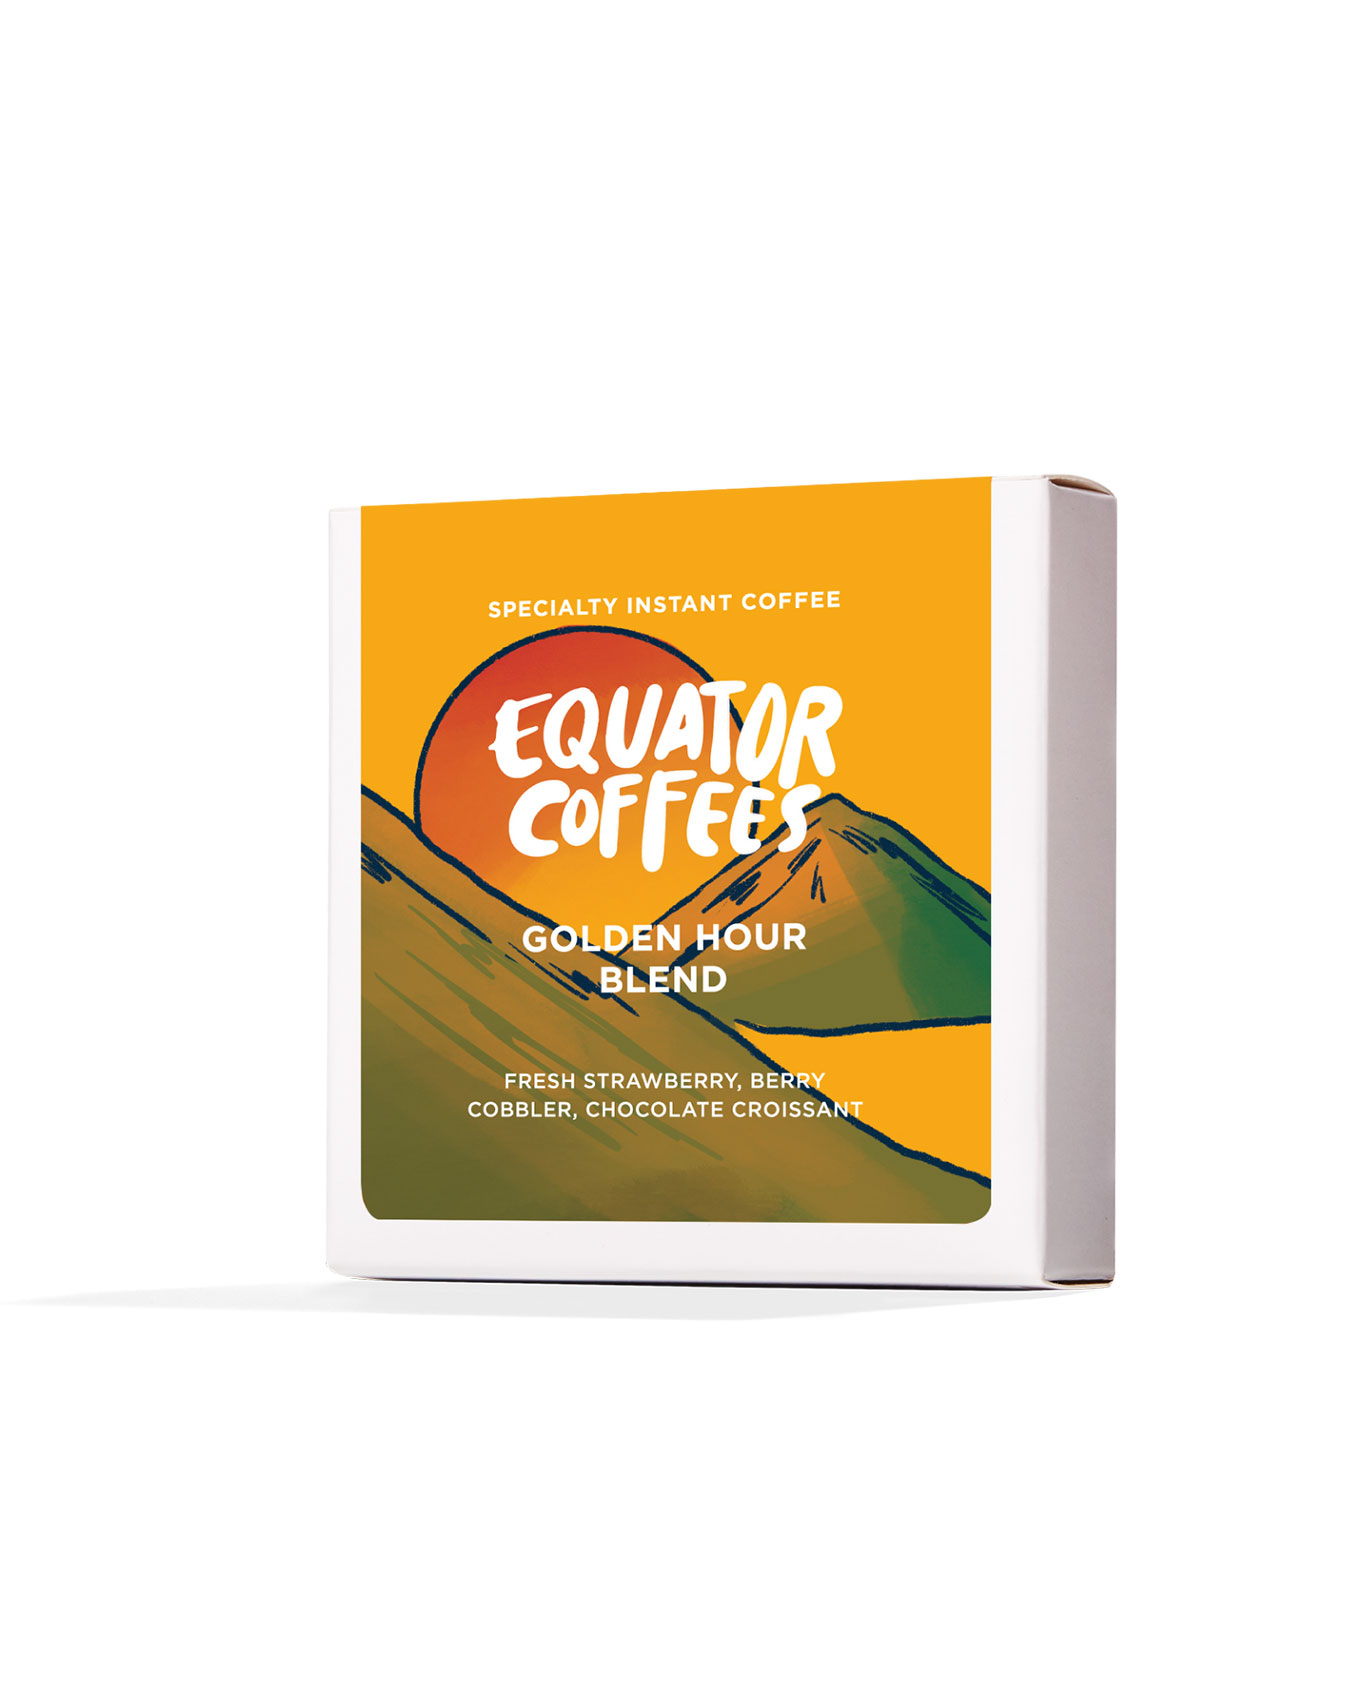 equator coffees seasonal sda submission 11